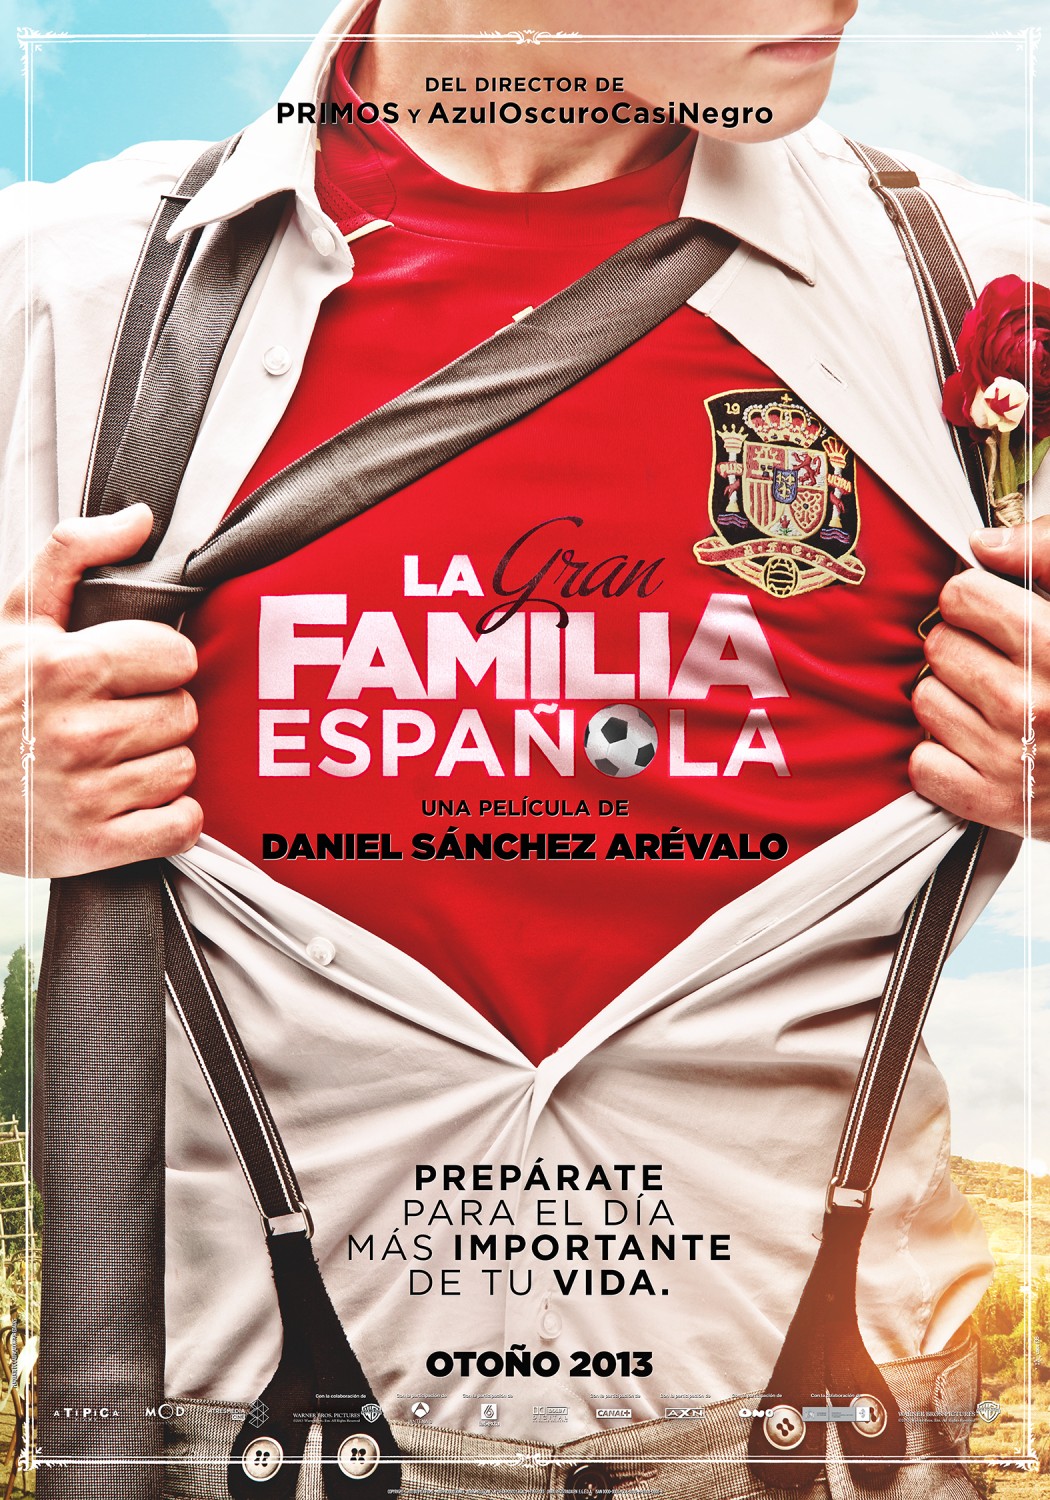 Extra Large Movie Poster Image for La gran familia española (#2 of 7)